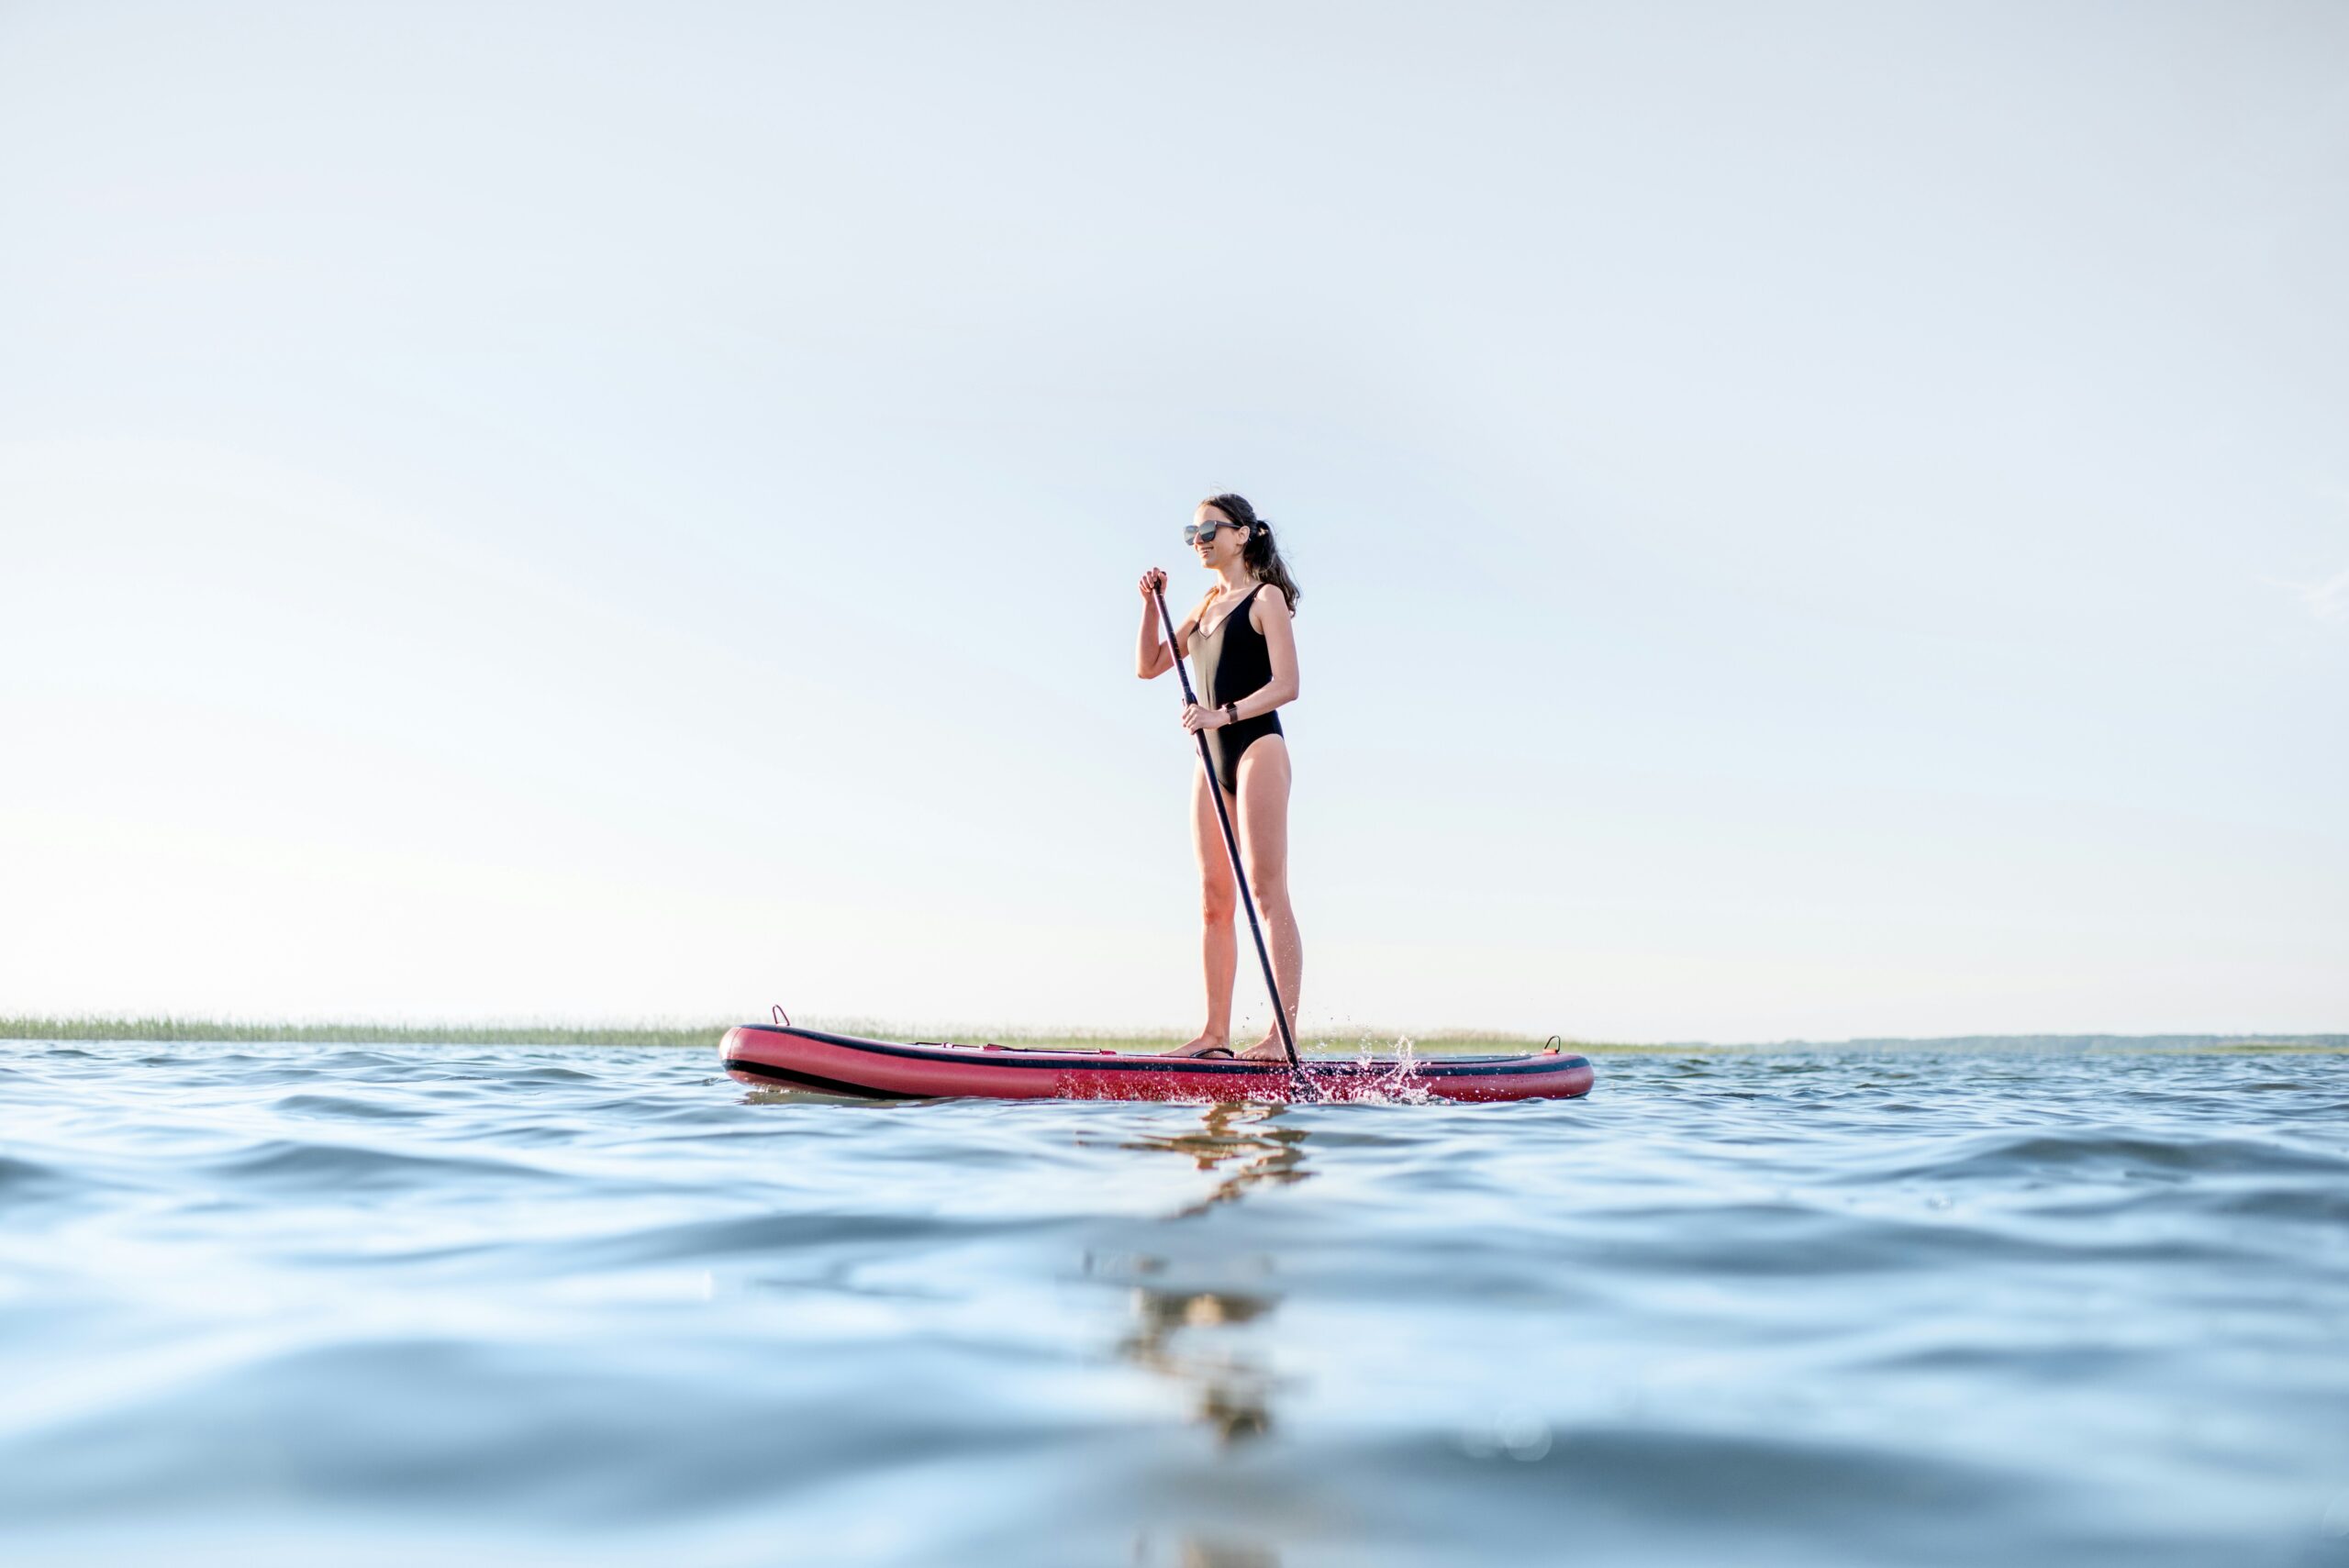 A woman paddle boarding